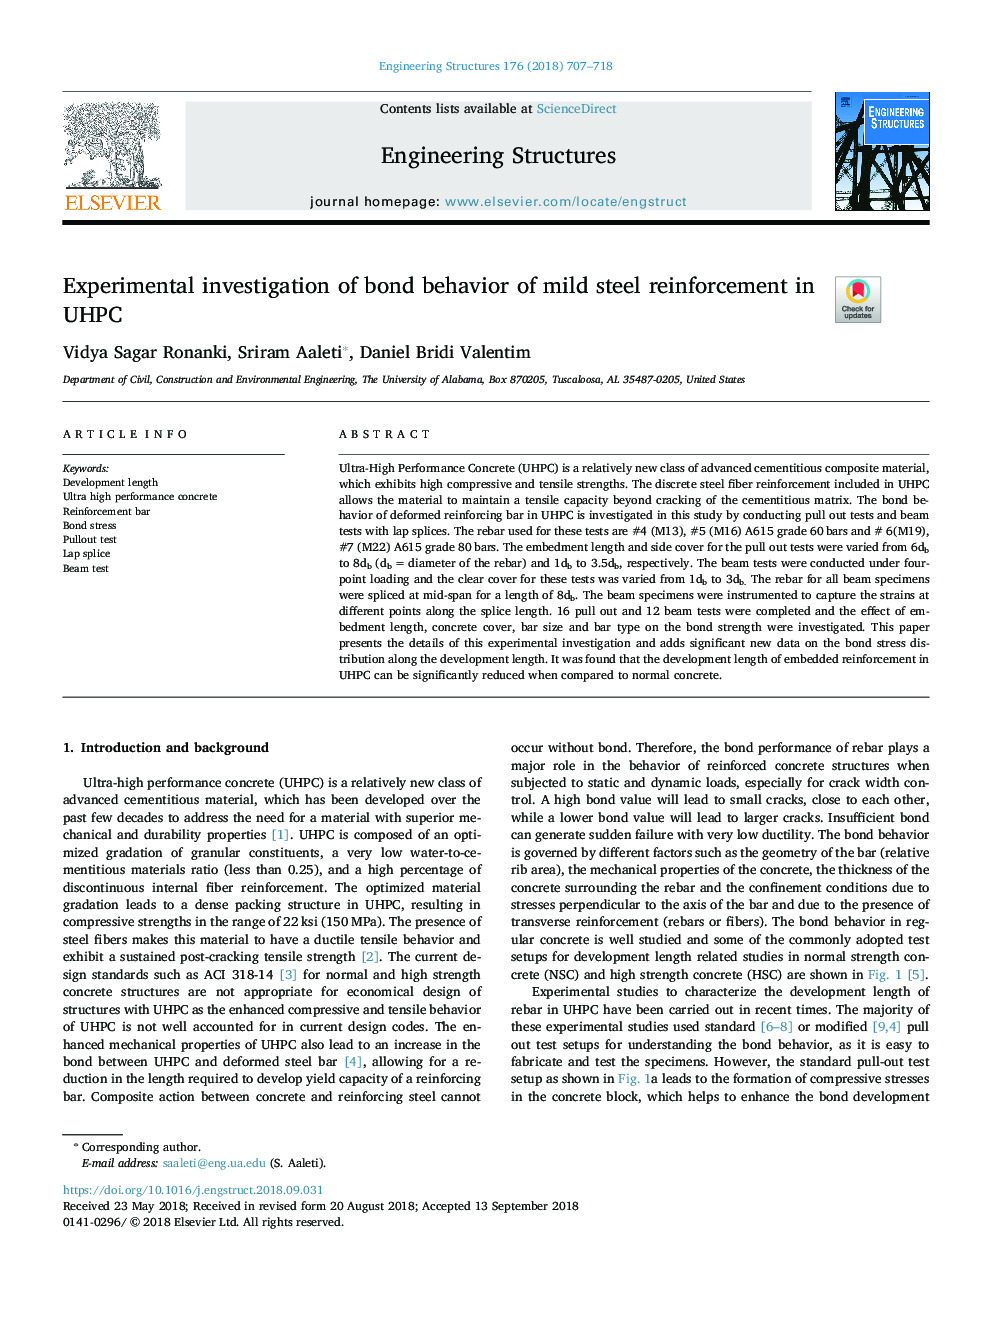 Experimental investigation of bond behavior of mild steel reinforcement in UHPC